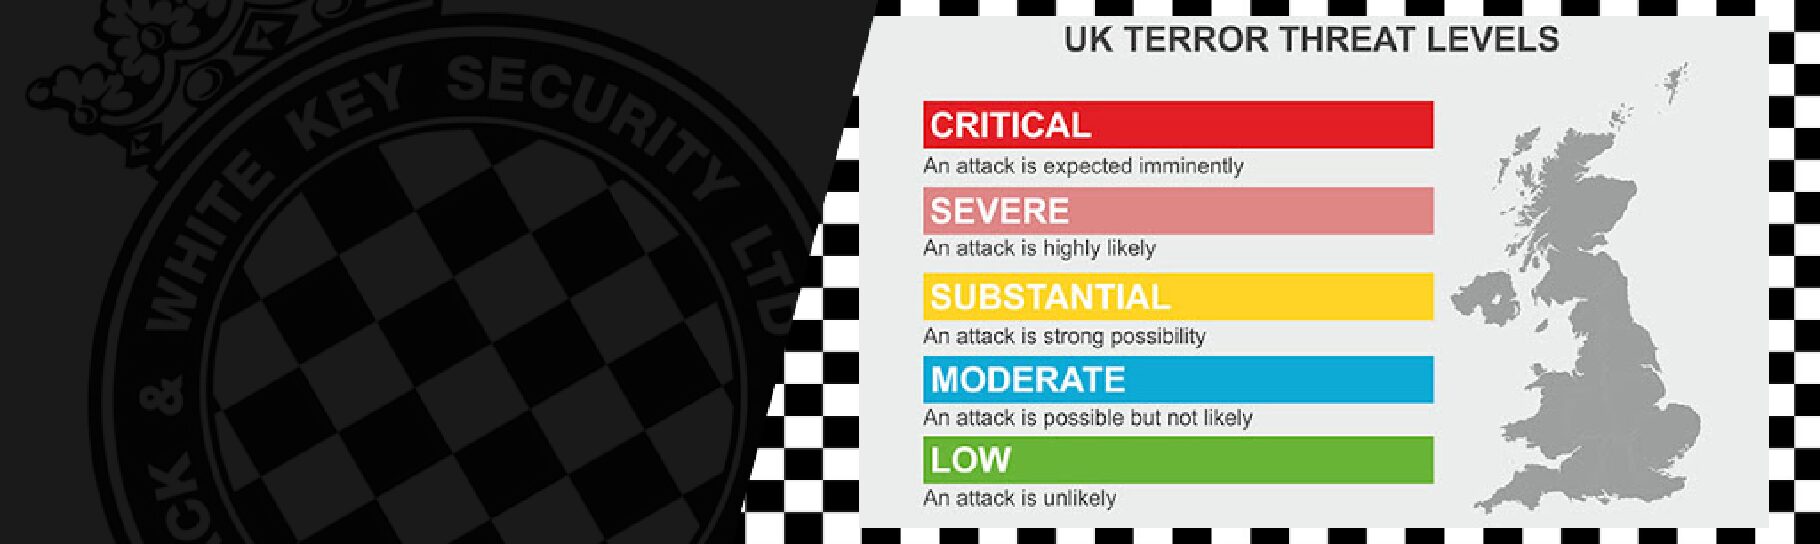 Knowledge of current UK Terror Threat